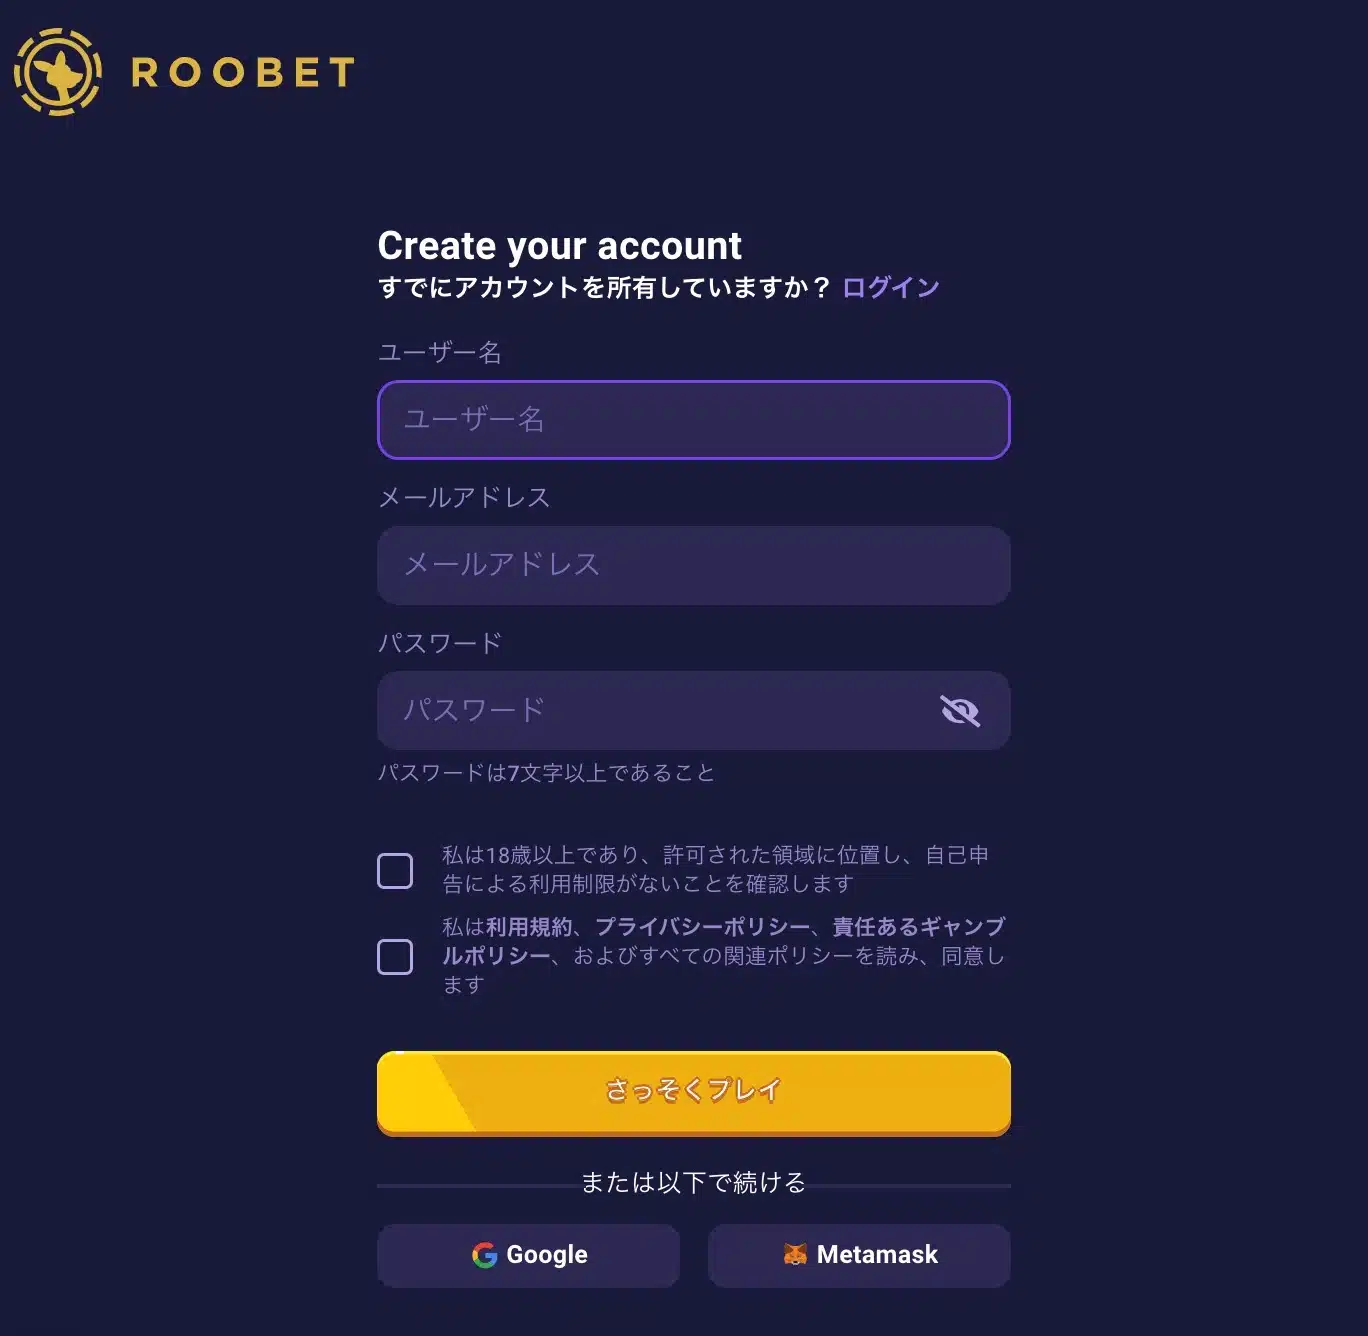 Roobet deposit image 3